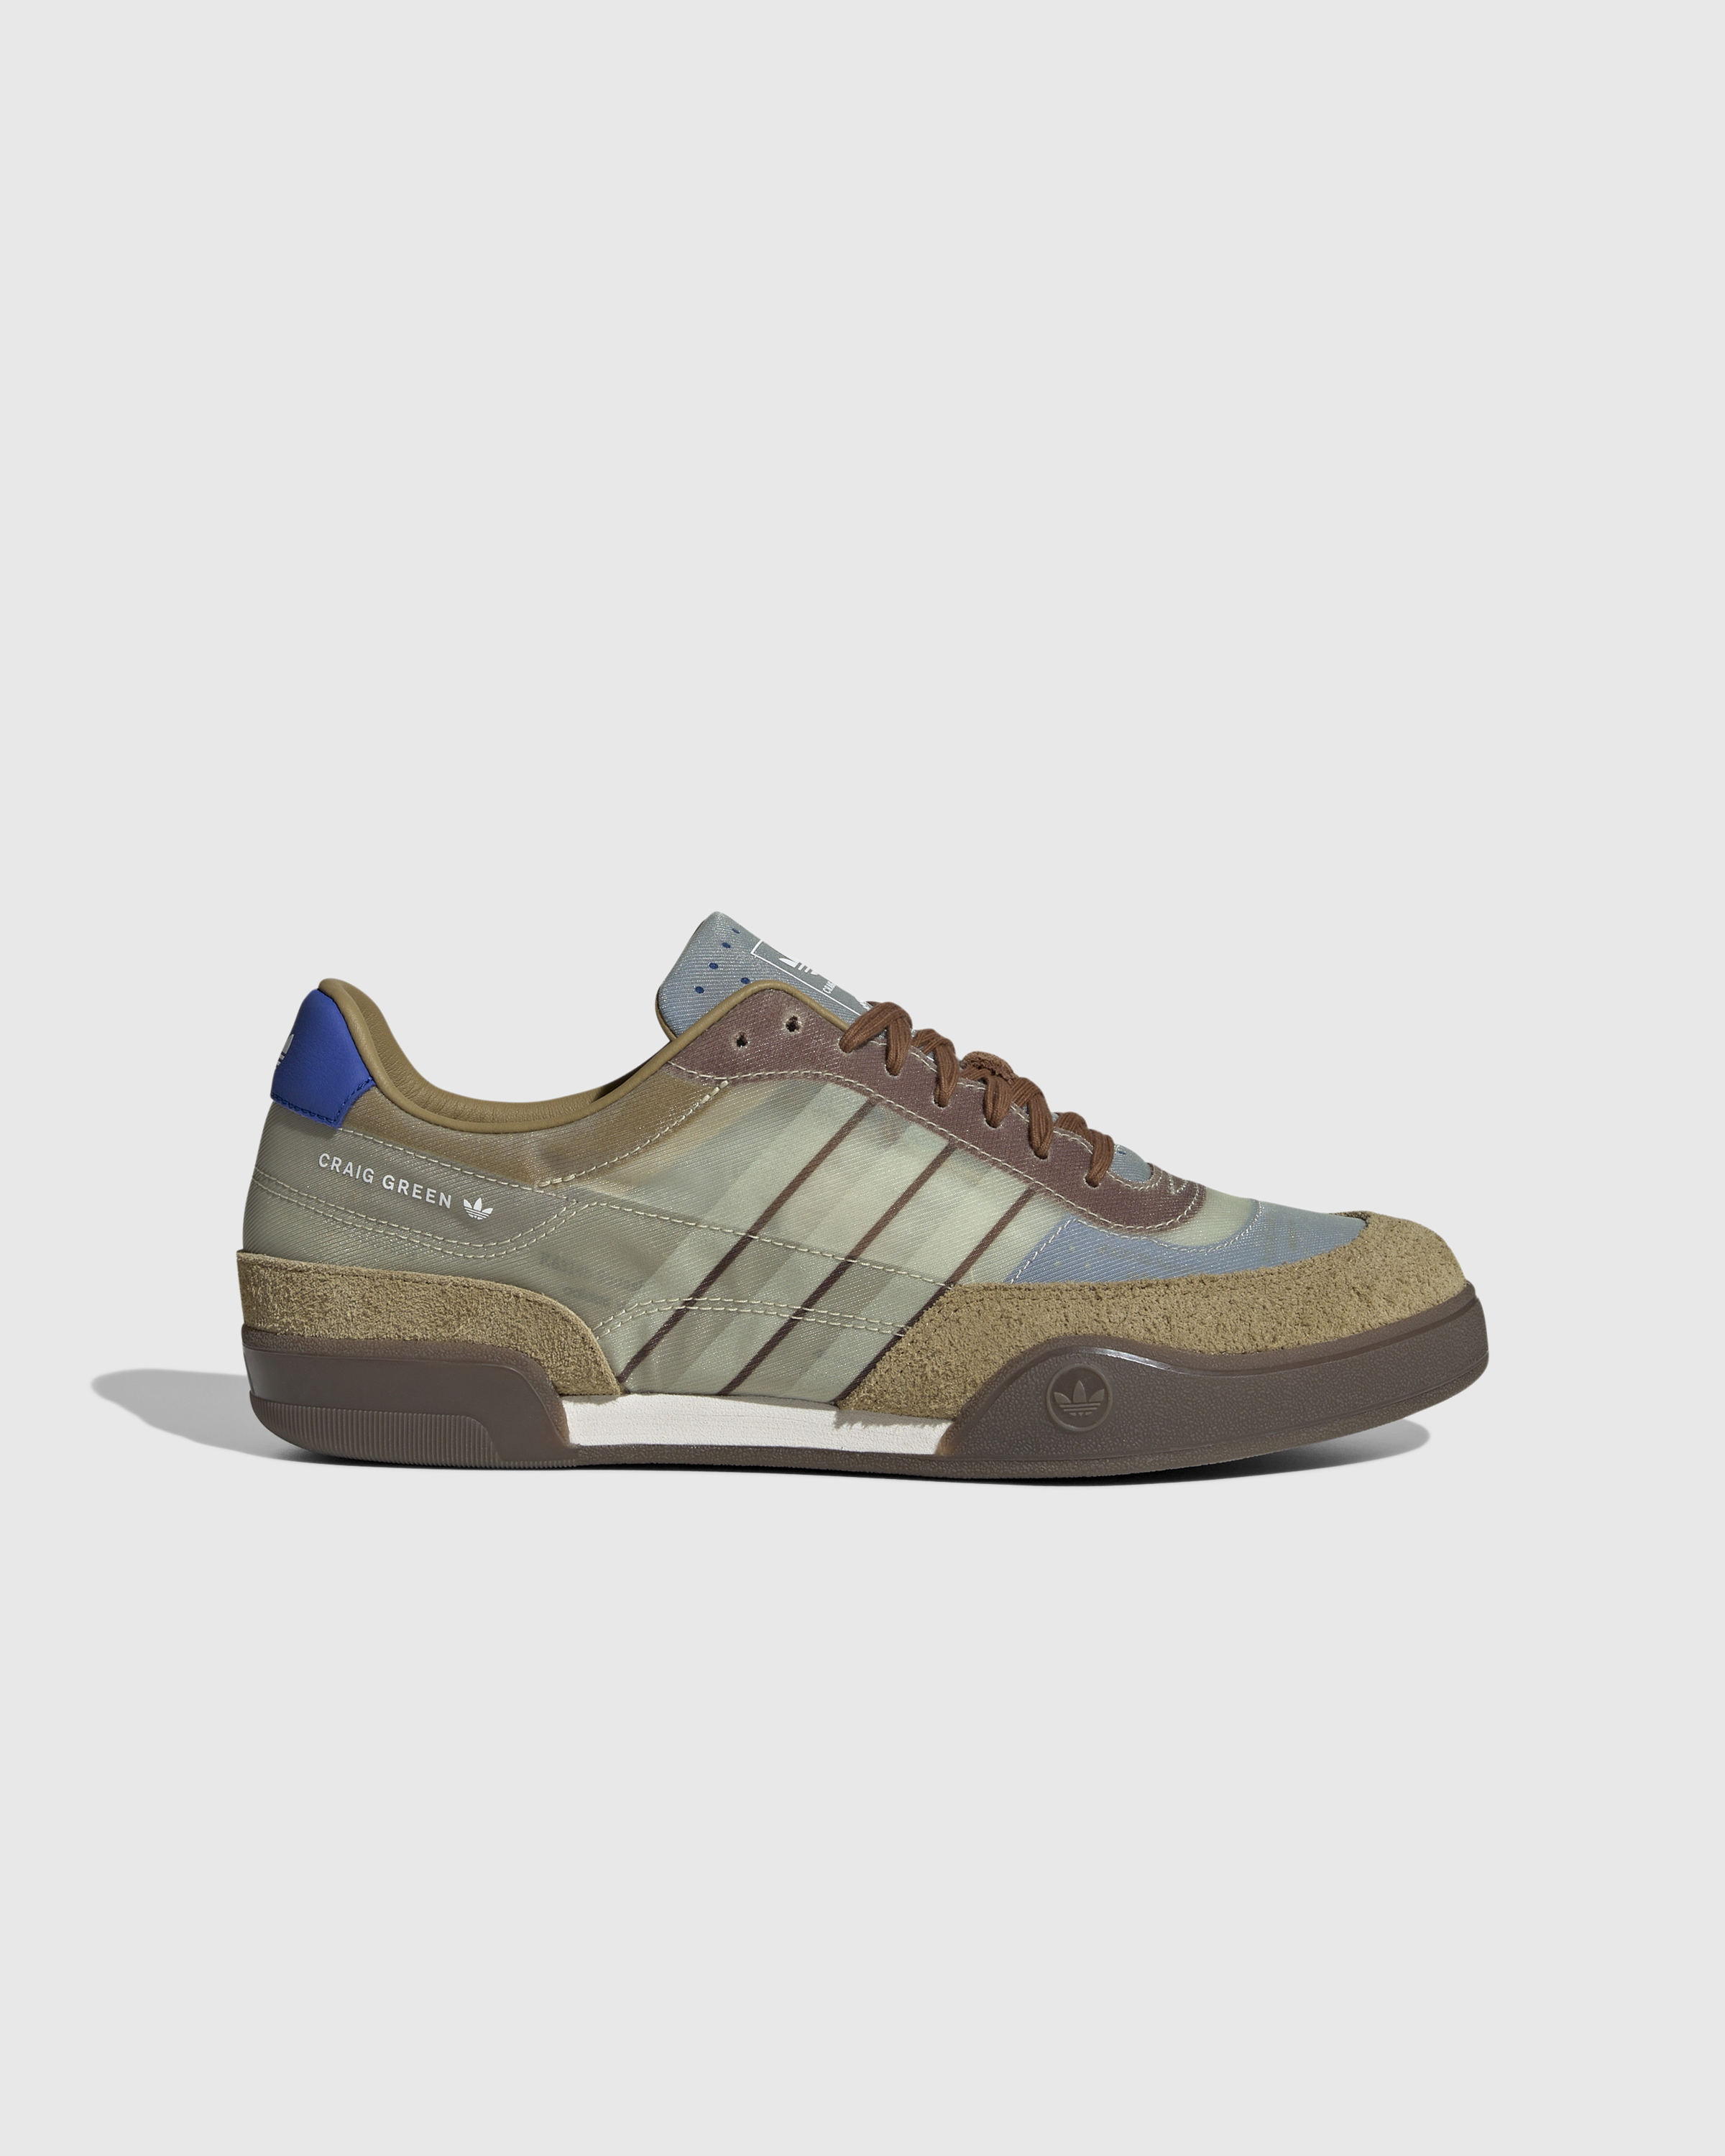 Adidas x Craig Green – Squash Polta Akh Dark Brown/Core Black/Blue - Low Top Sneakers - Brown - Image 1